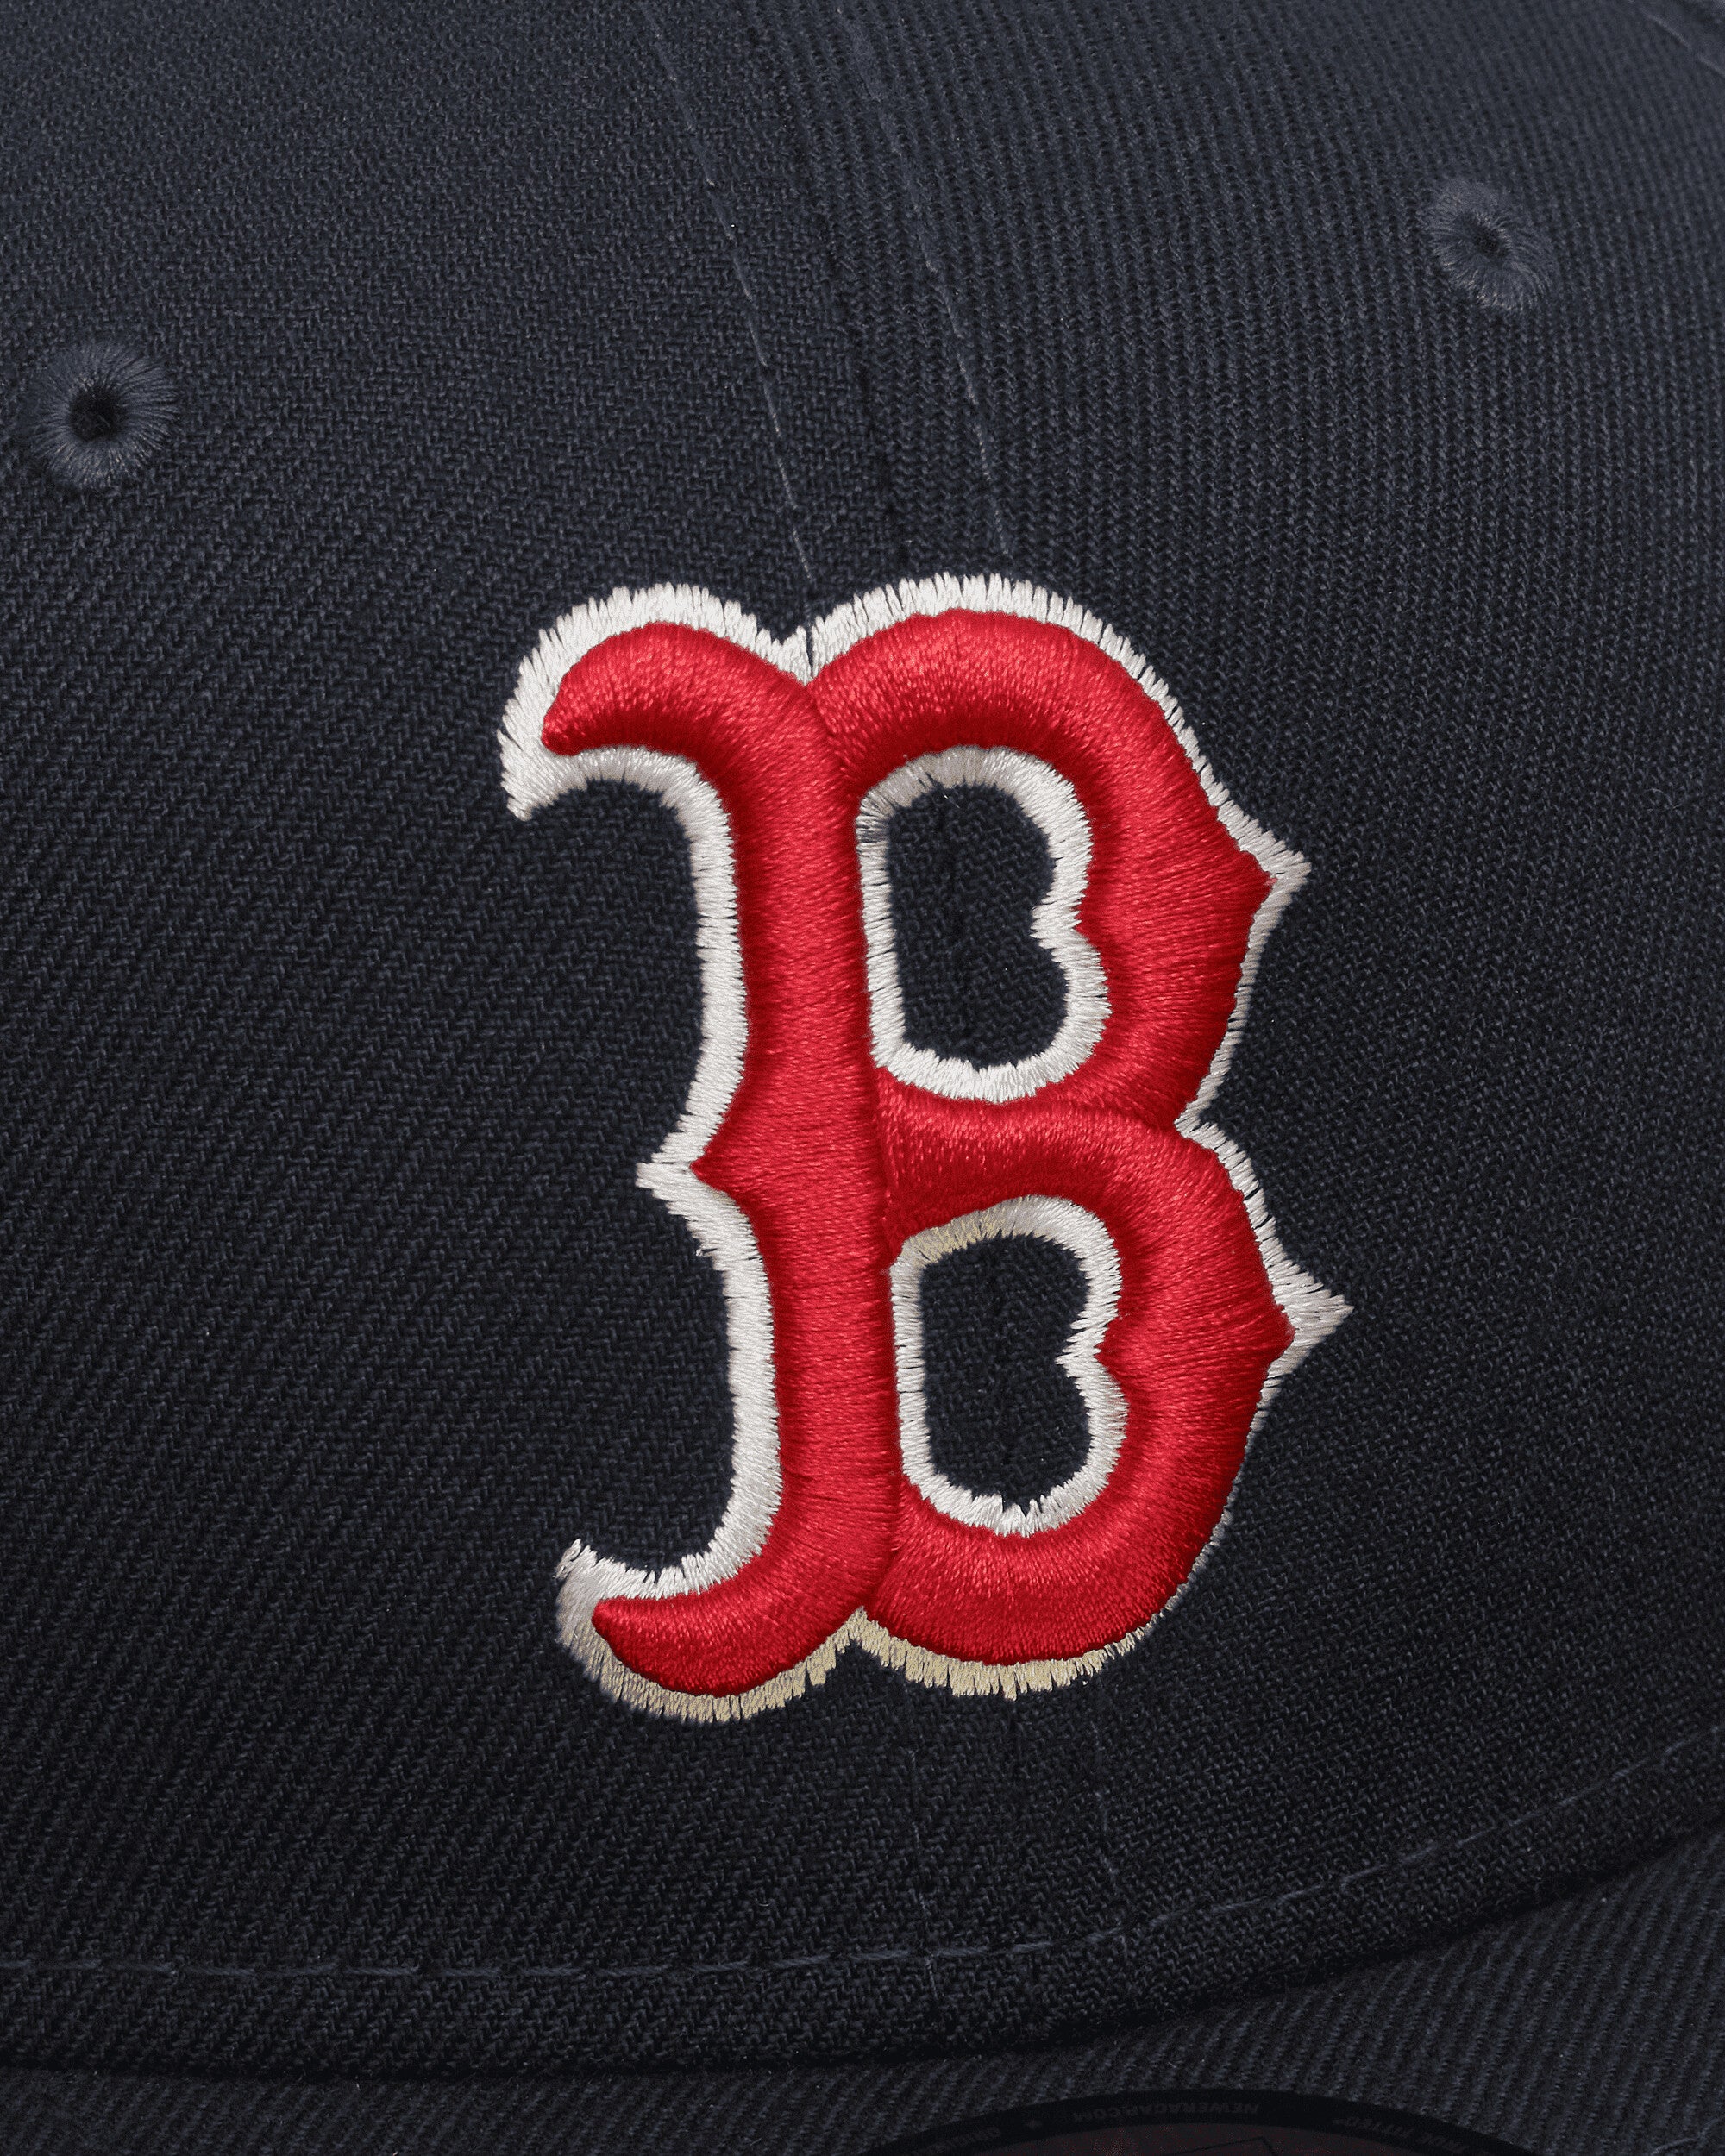 New Era 59Fifty Boston Red Sox Boston Red Sox Hats Caps 12572847 001